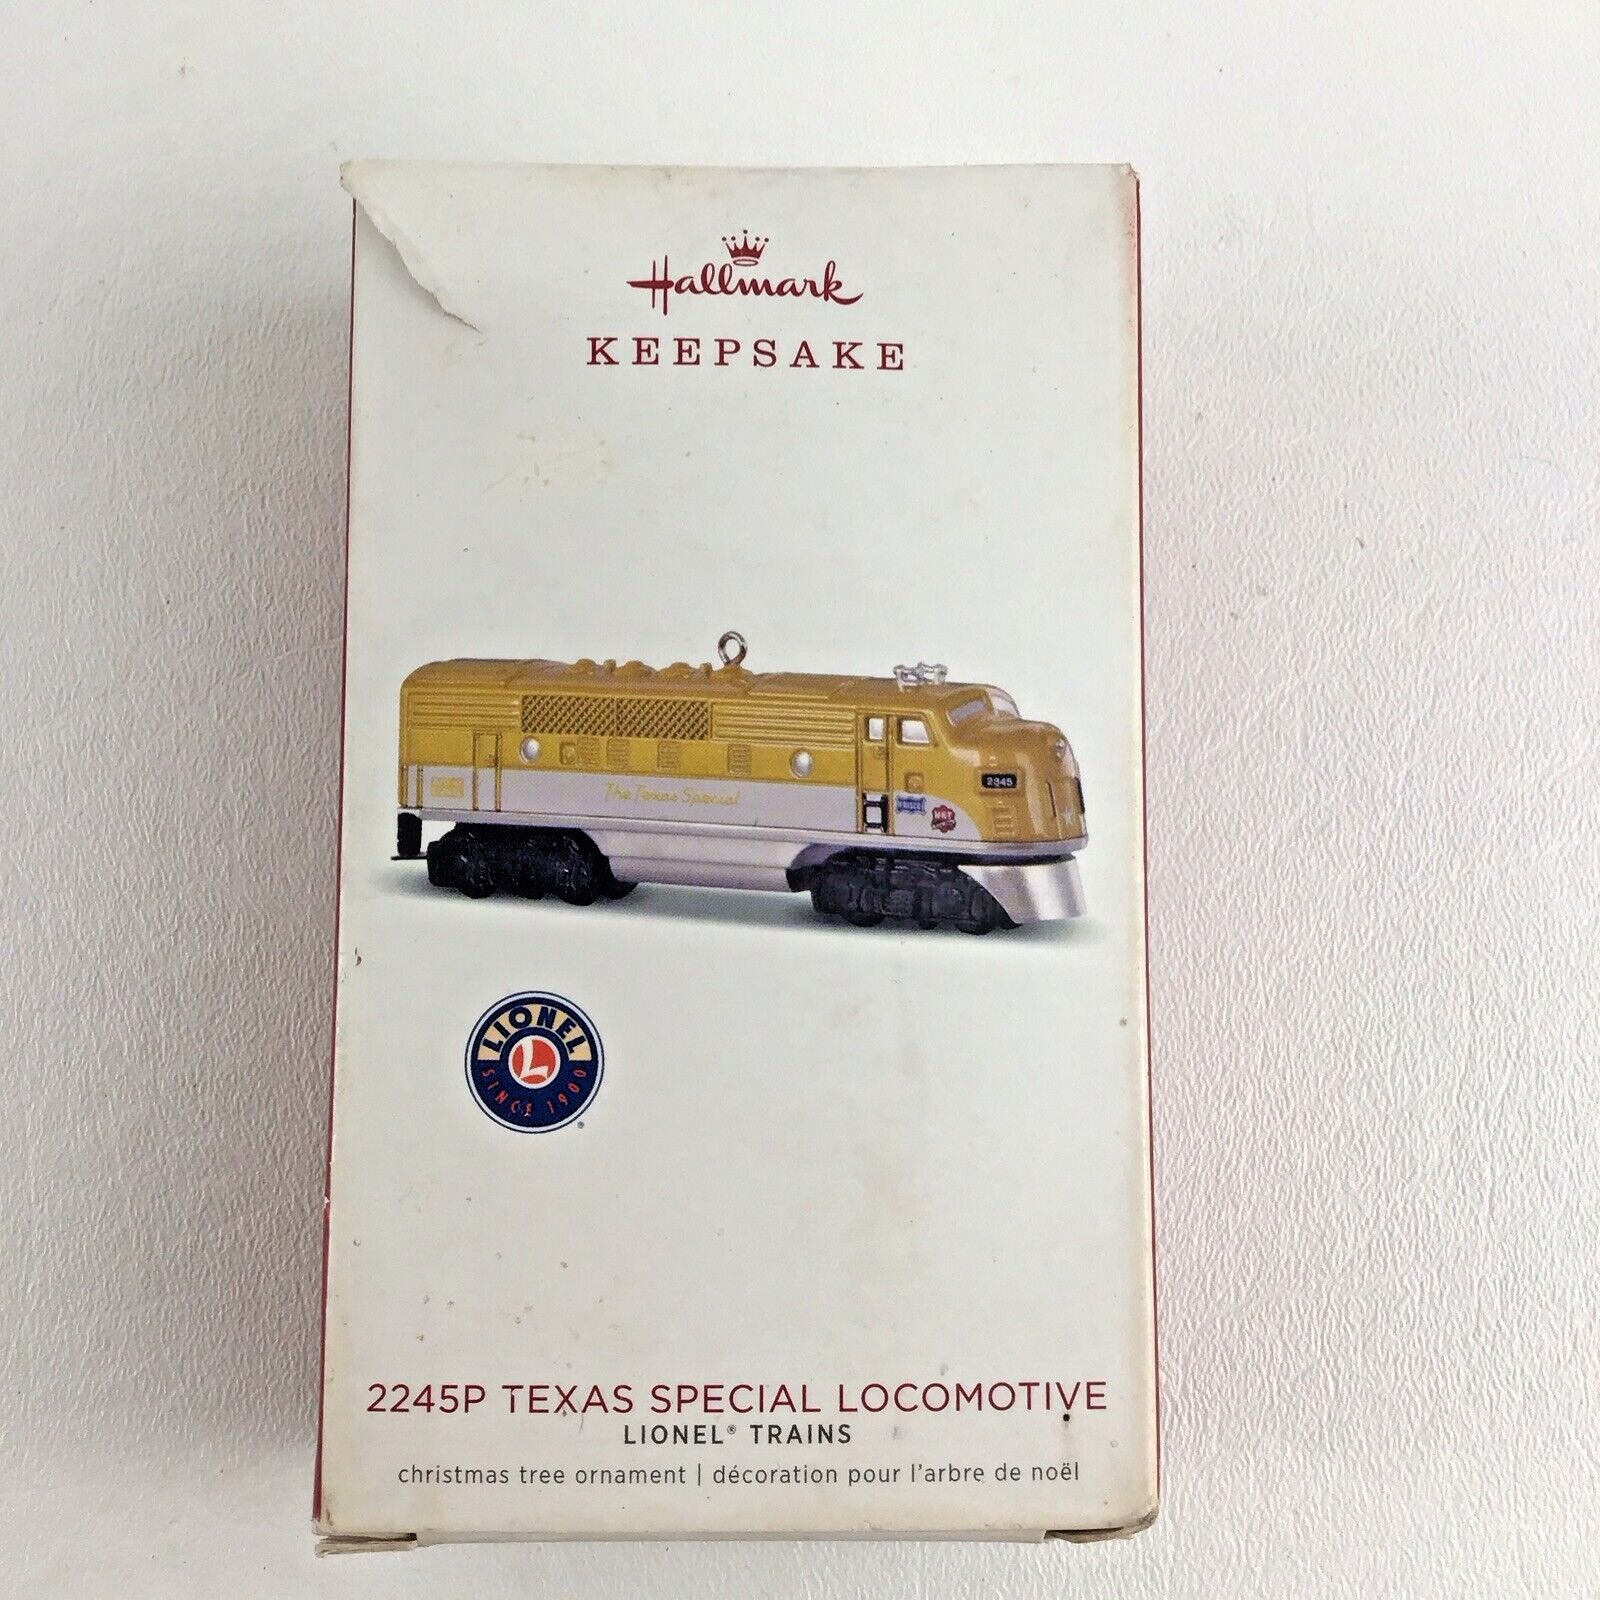 Hallmark Keepsake Christmas Ornament Lionel Train 2245P Texas Special Locomotive